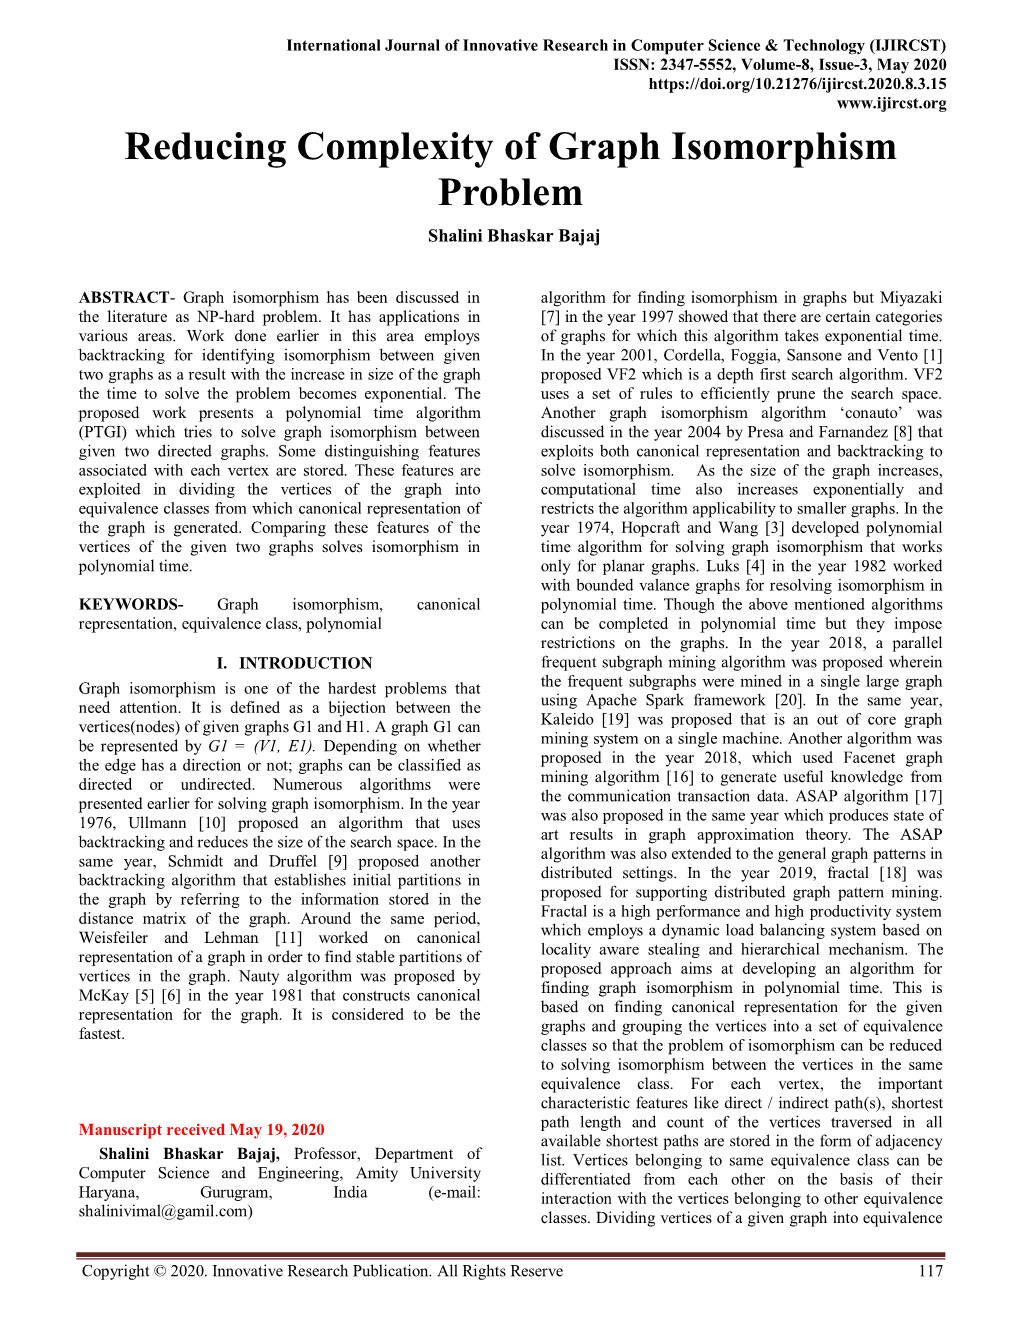 Reducing Complexity of Graph Isomorphism Problem Shalini Bhaskar Bajaj